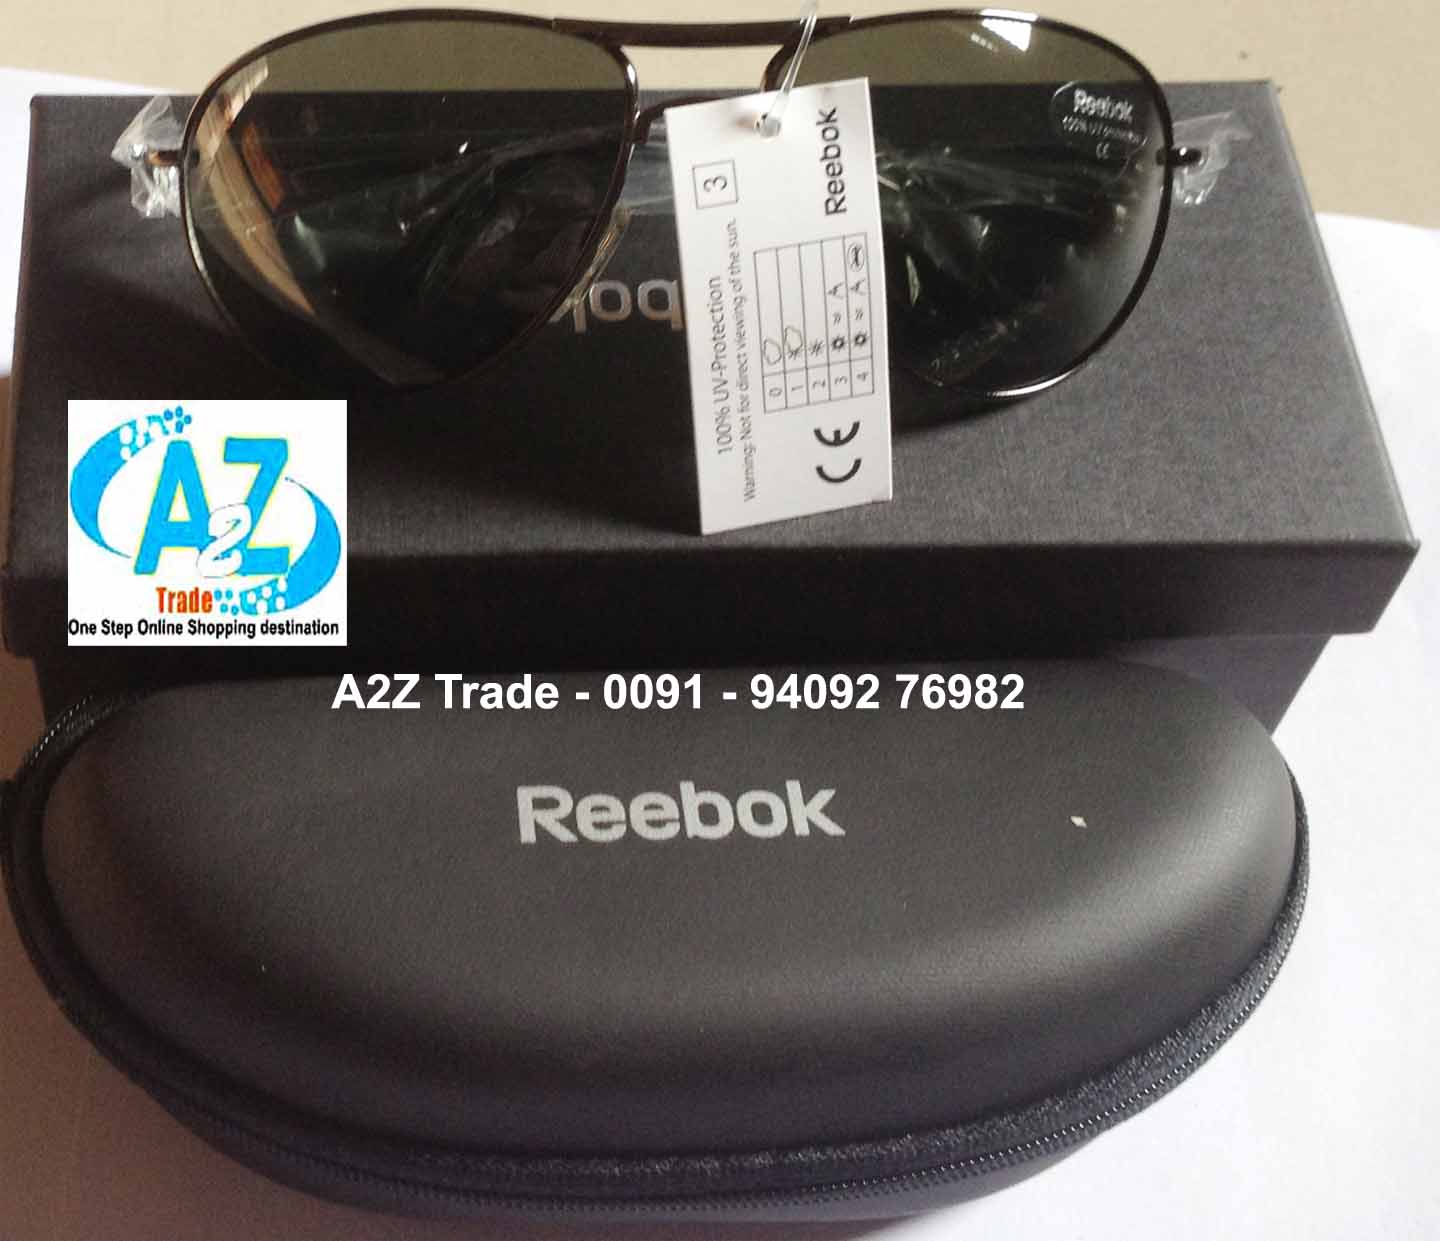 reebok classic sunglasses for sale